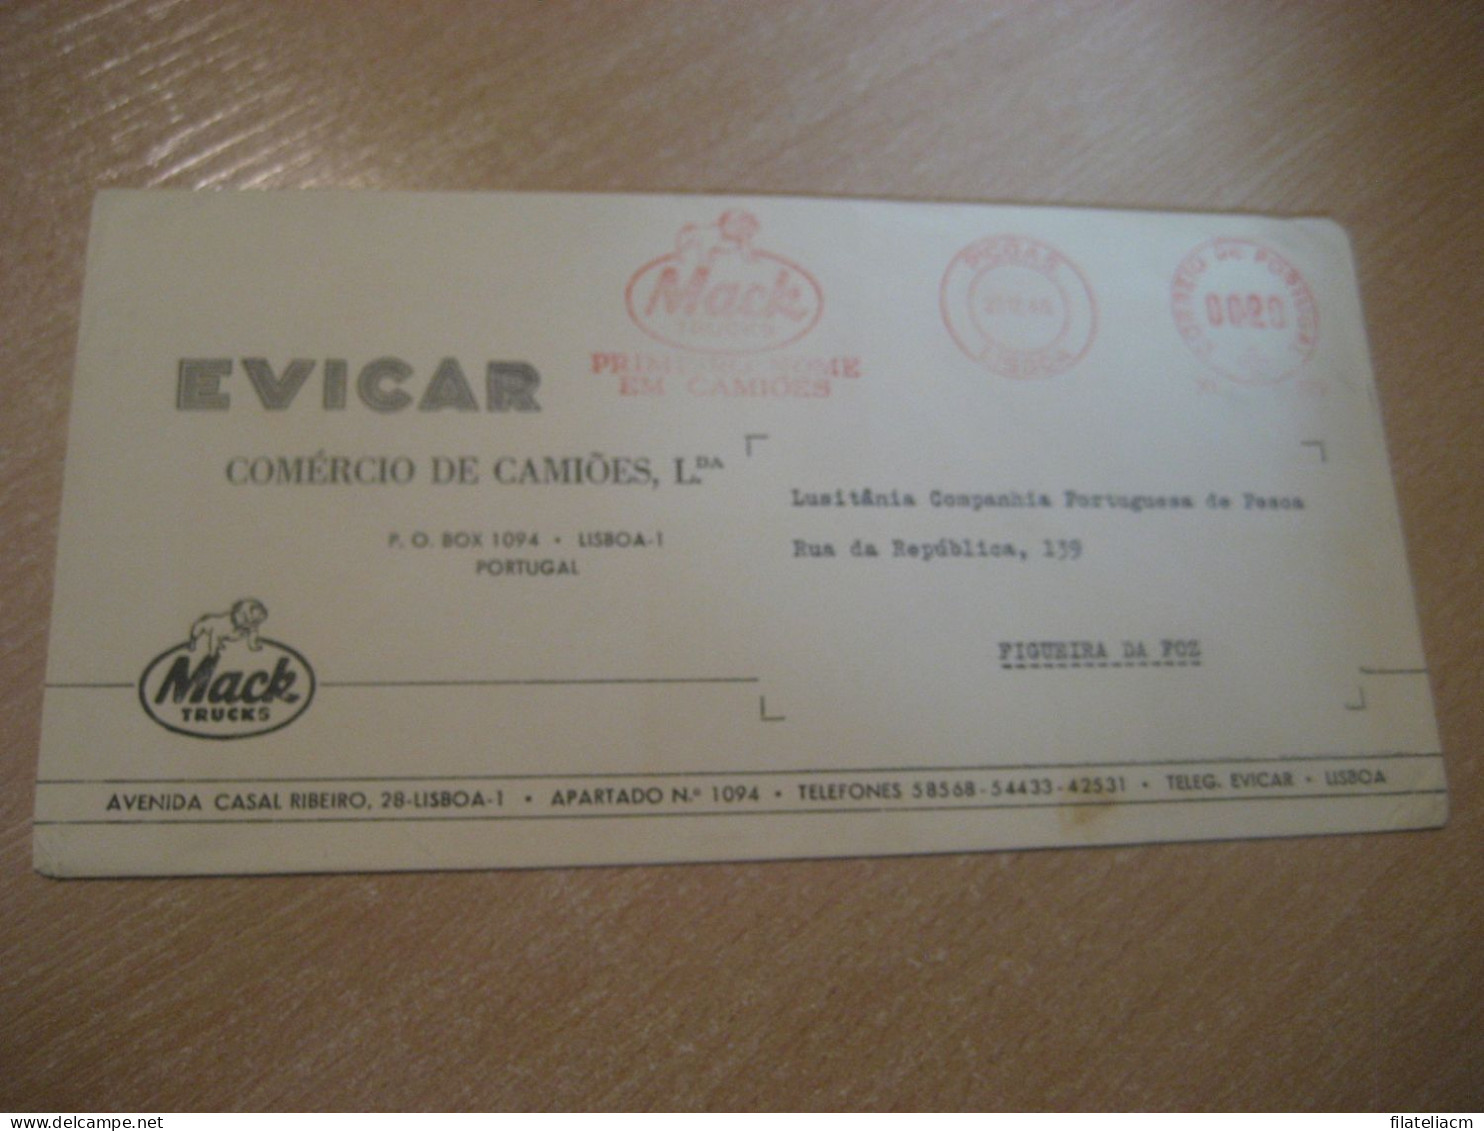 LISBOA 1965 To Figueira Da Foz EVICAR Mack Trucks Truck Dog Meter Mail Cancel Cover PORTUGAL - Covers & Documents